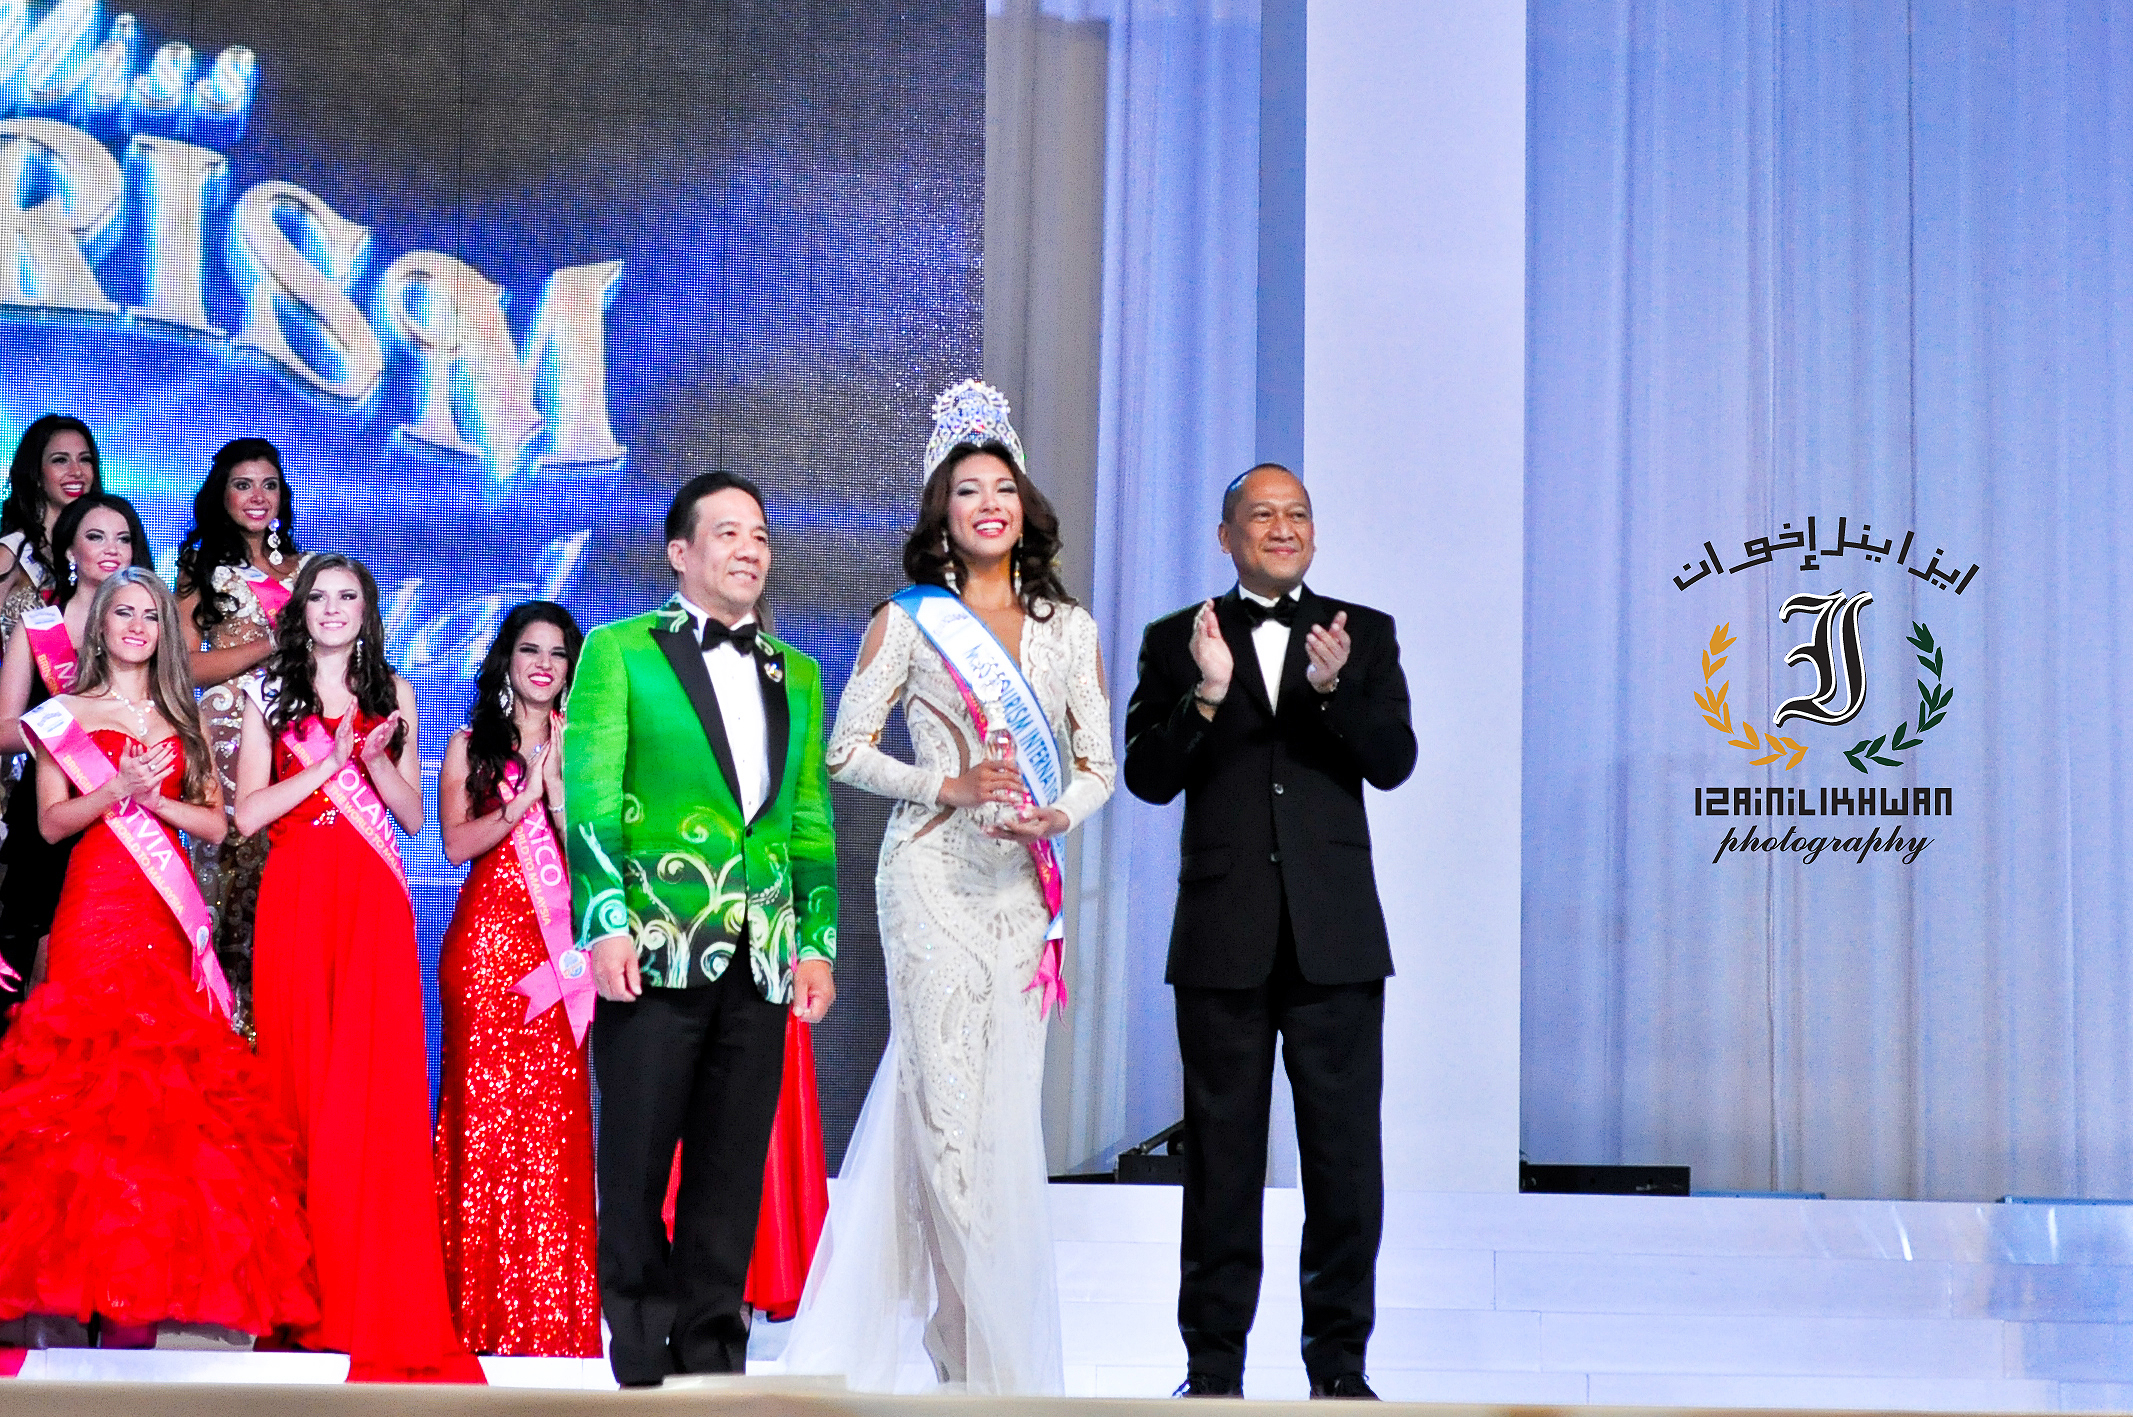 Miss Tourism International 2013/14